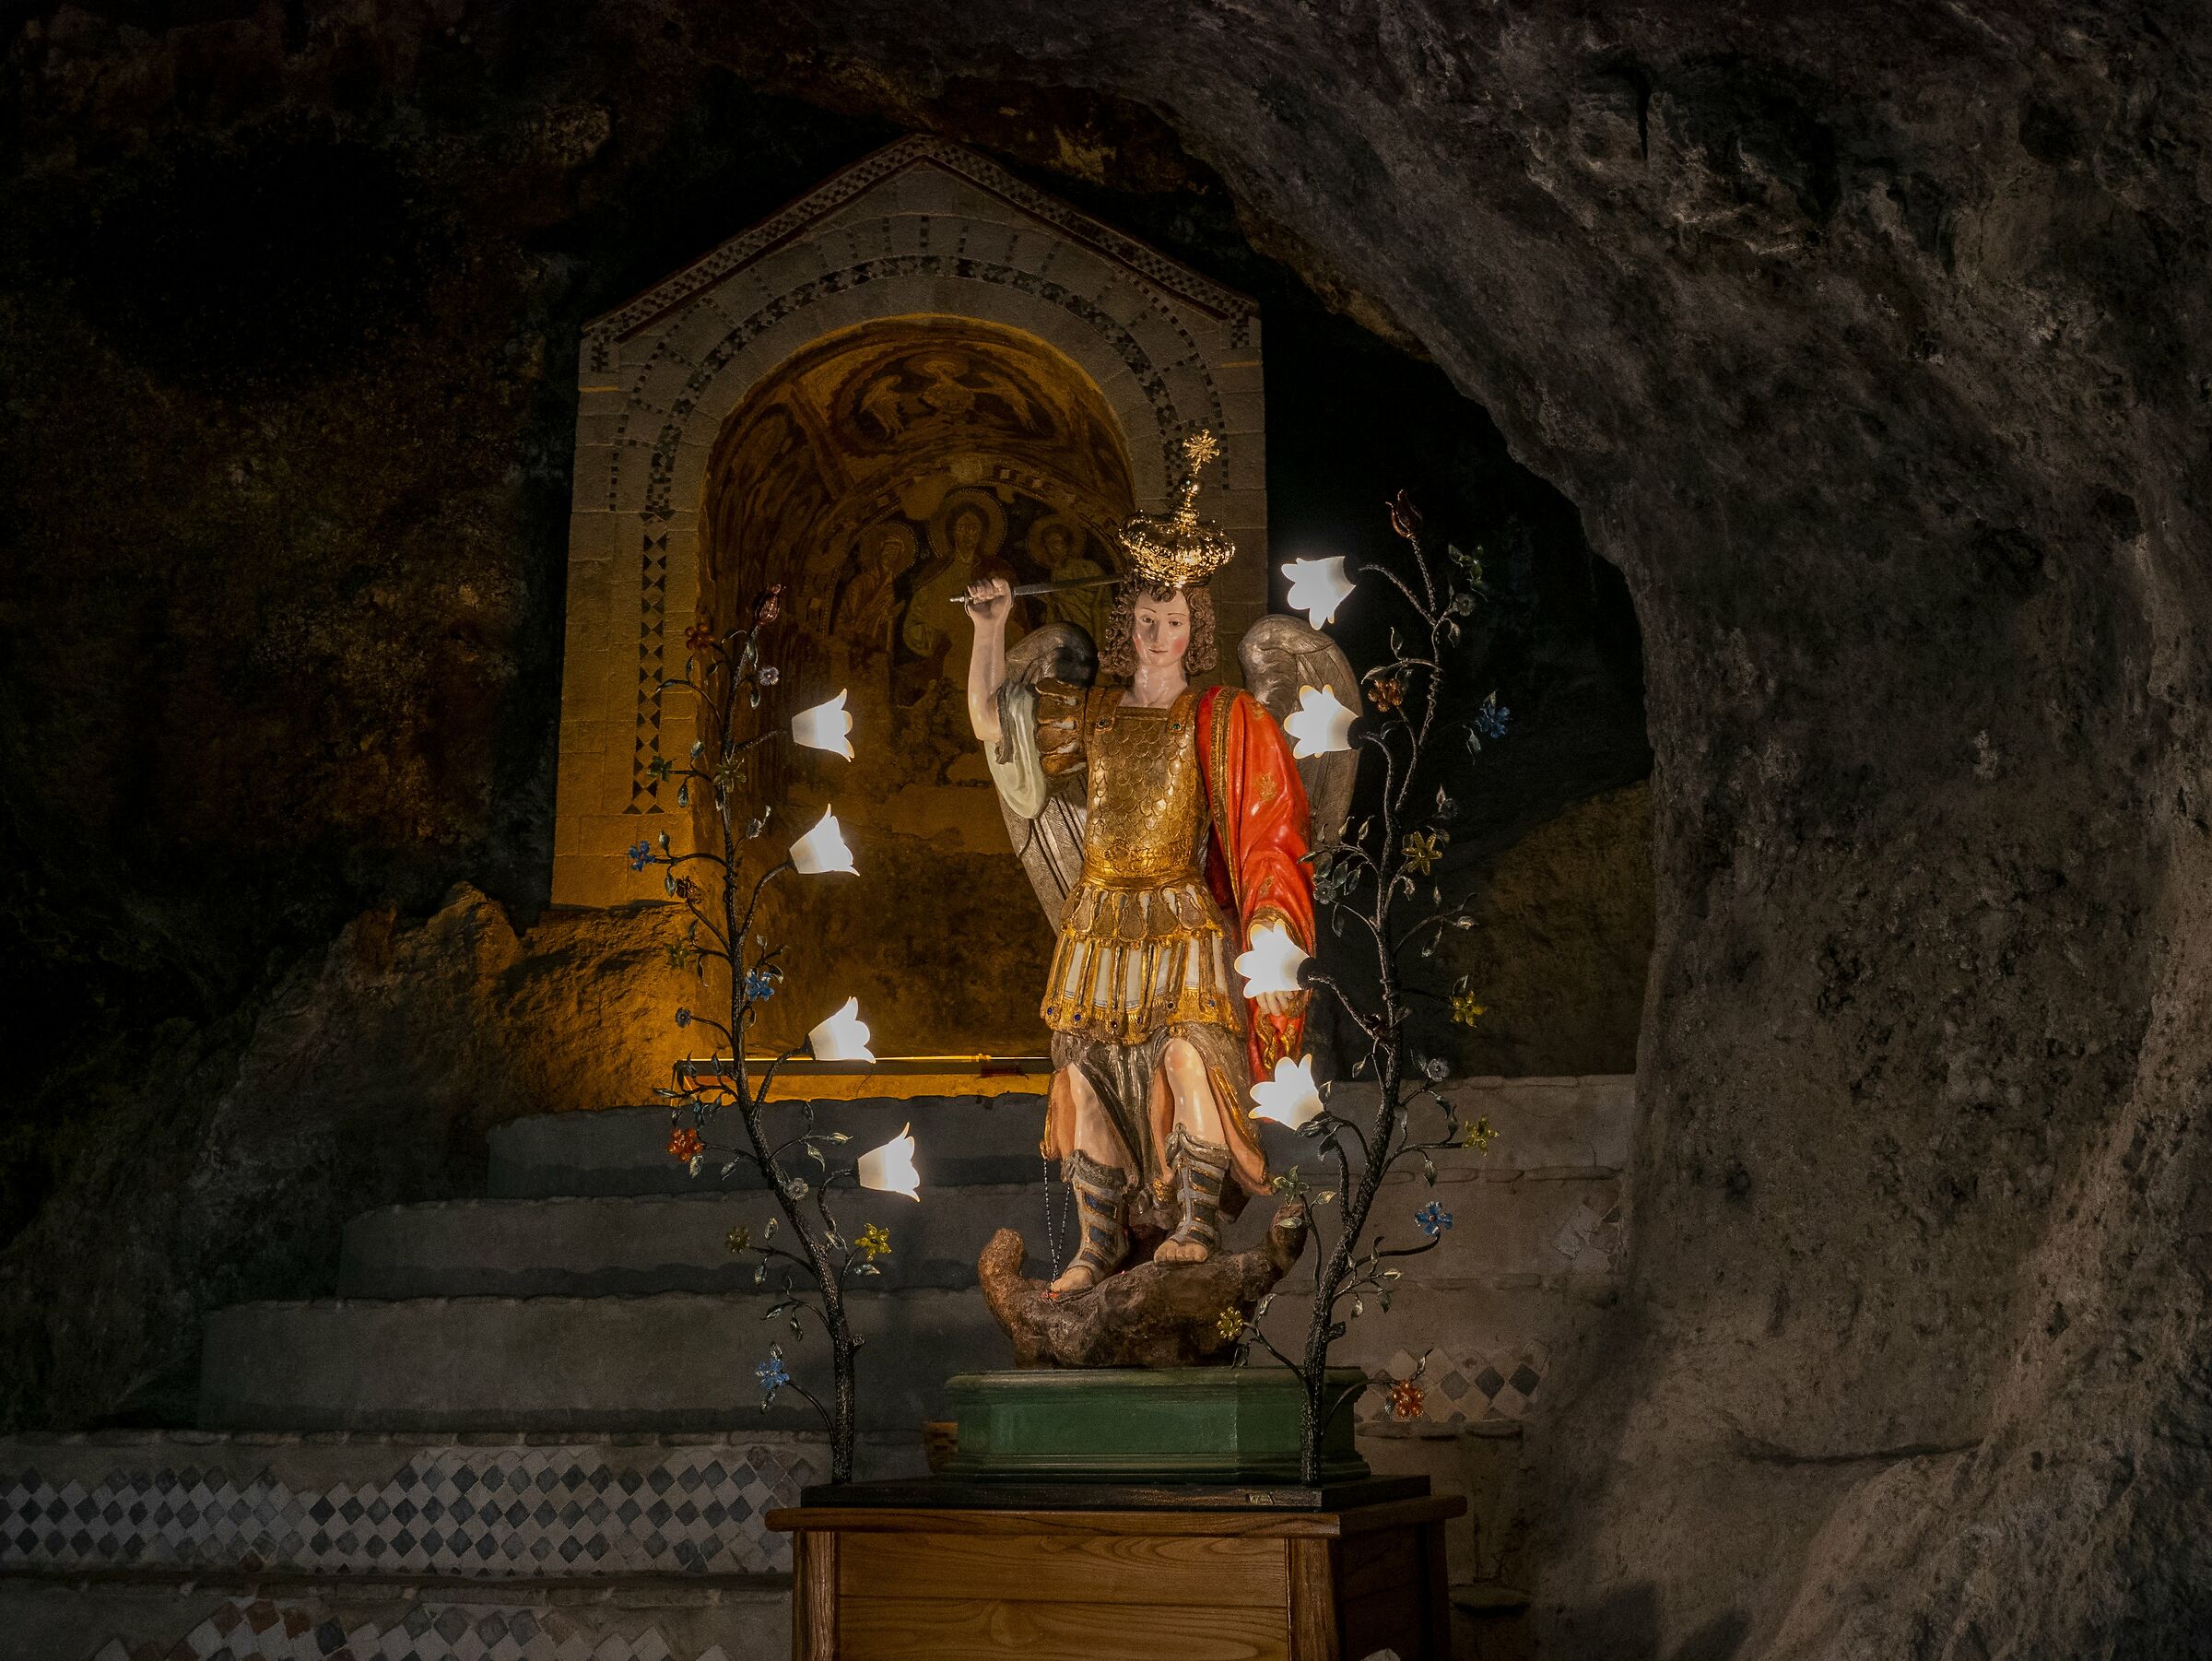 Archangel St. Michael, protecting Monticchio...